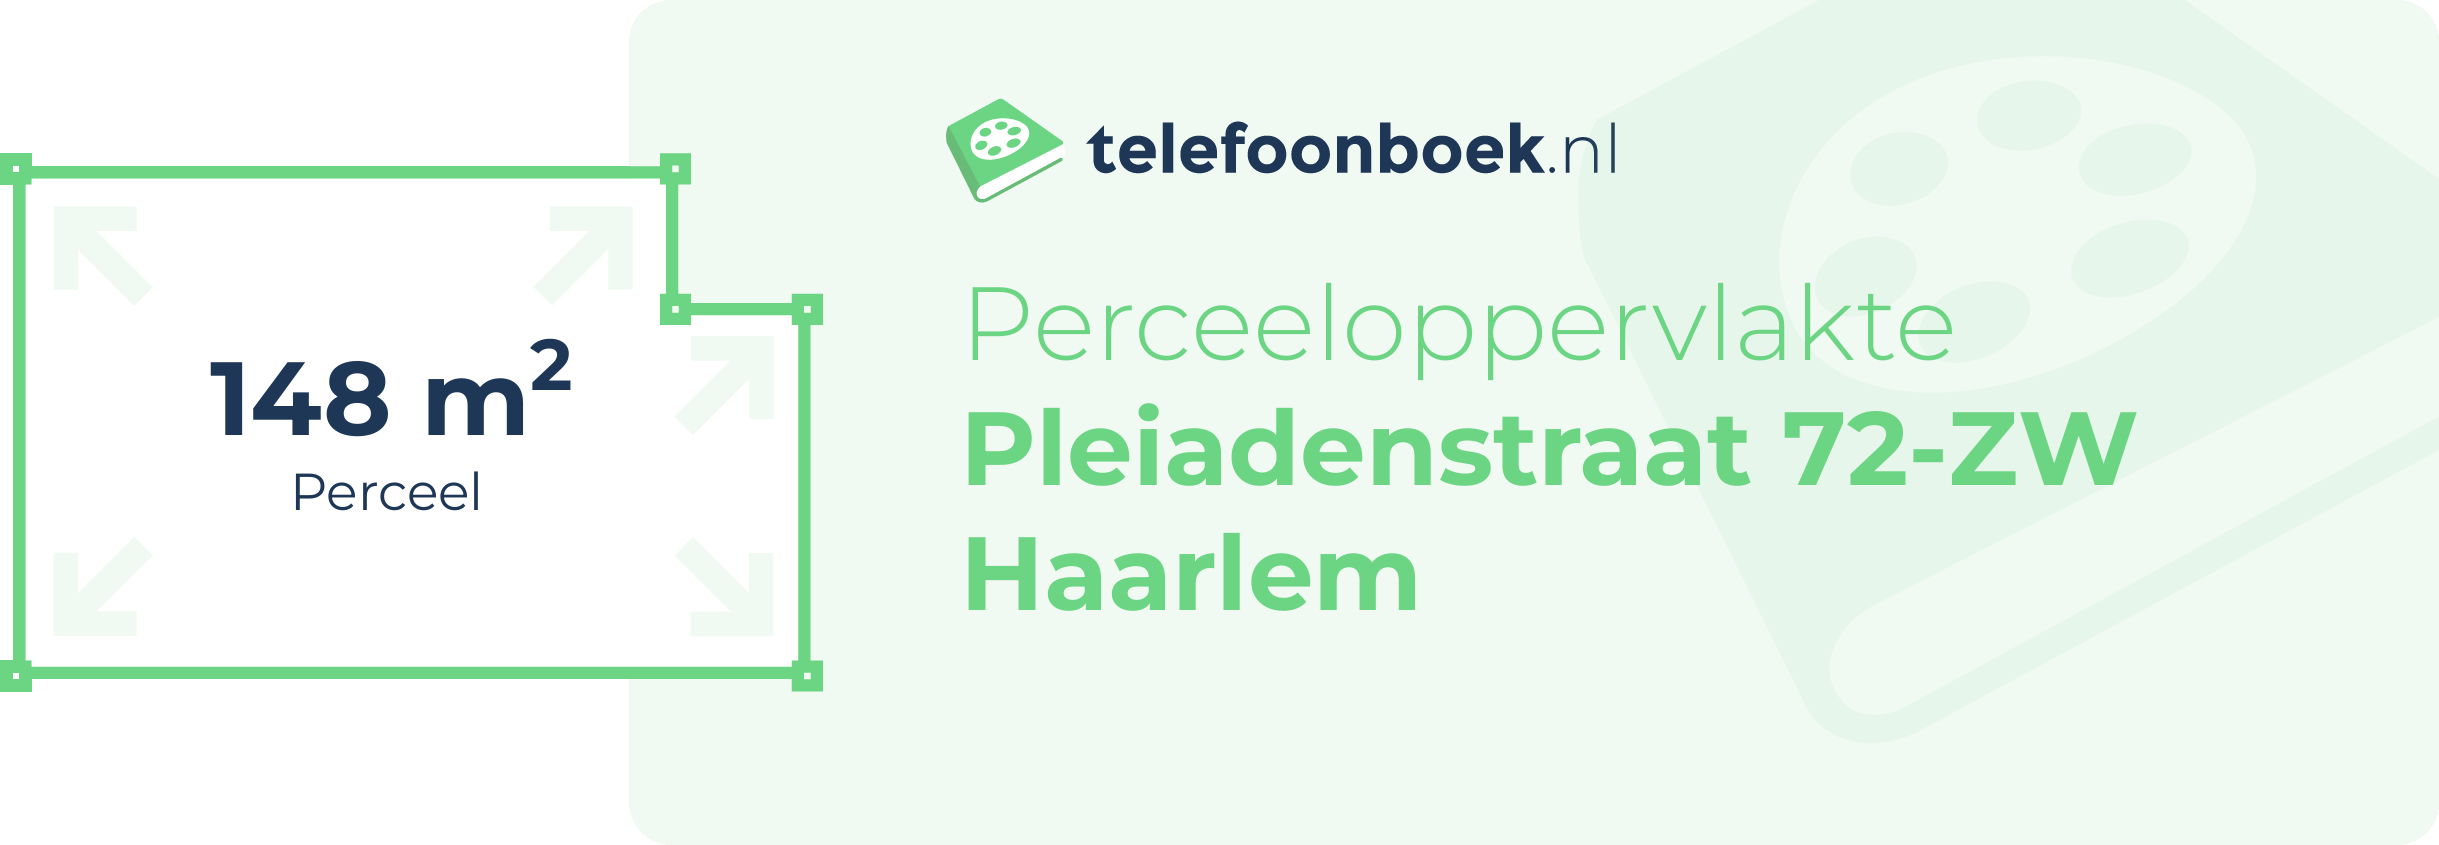 Perceeloppervlakte Pleiadenstraat 72-ZW Haarlem